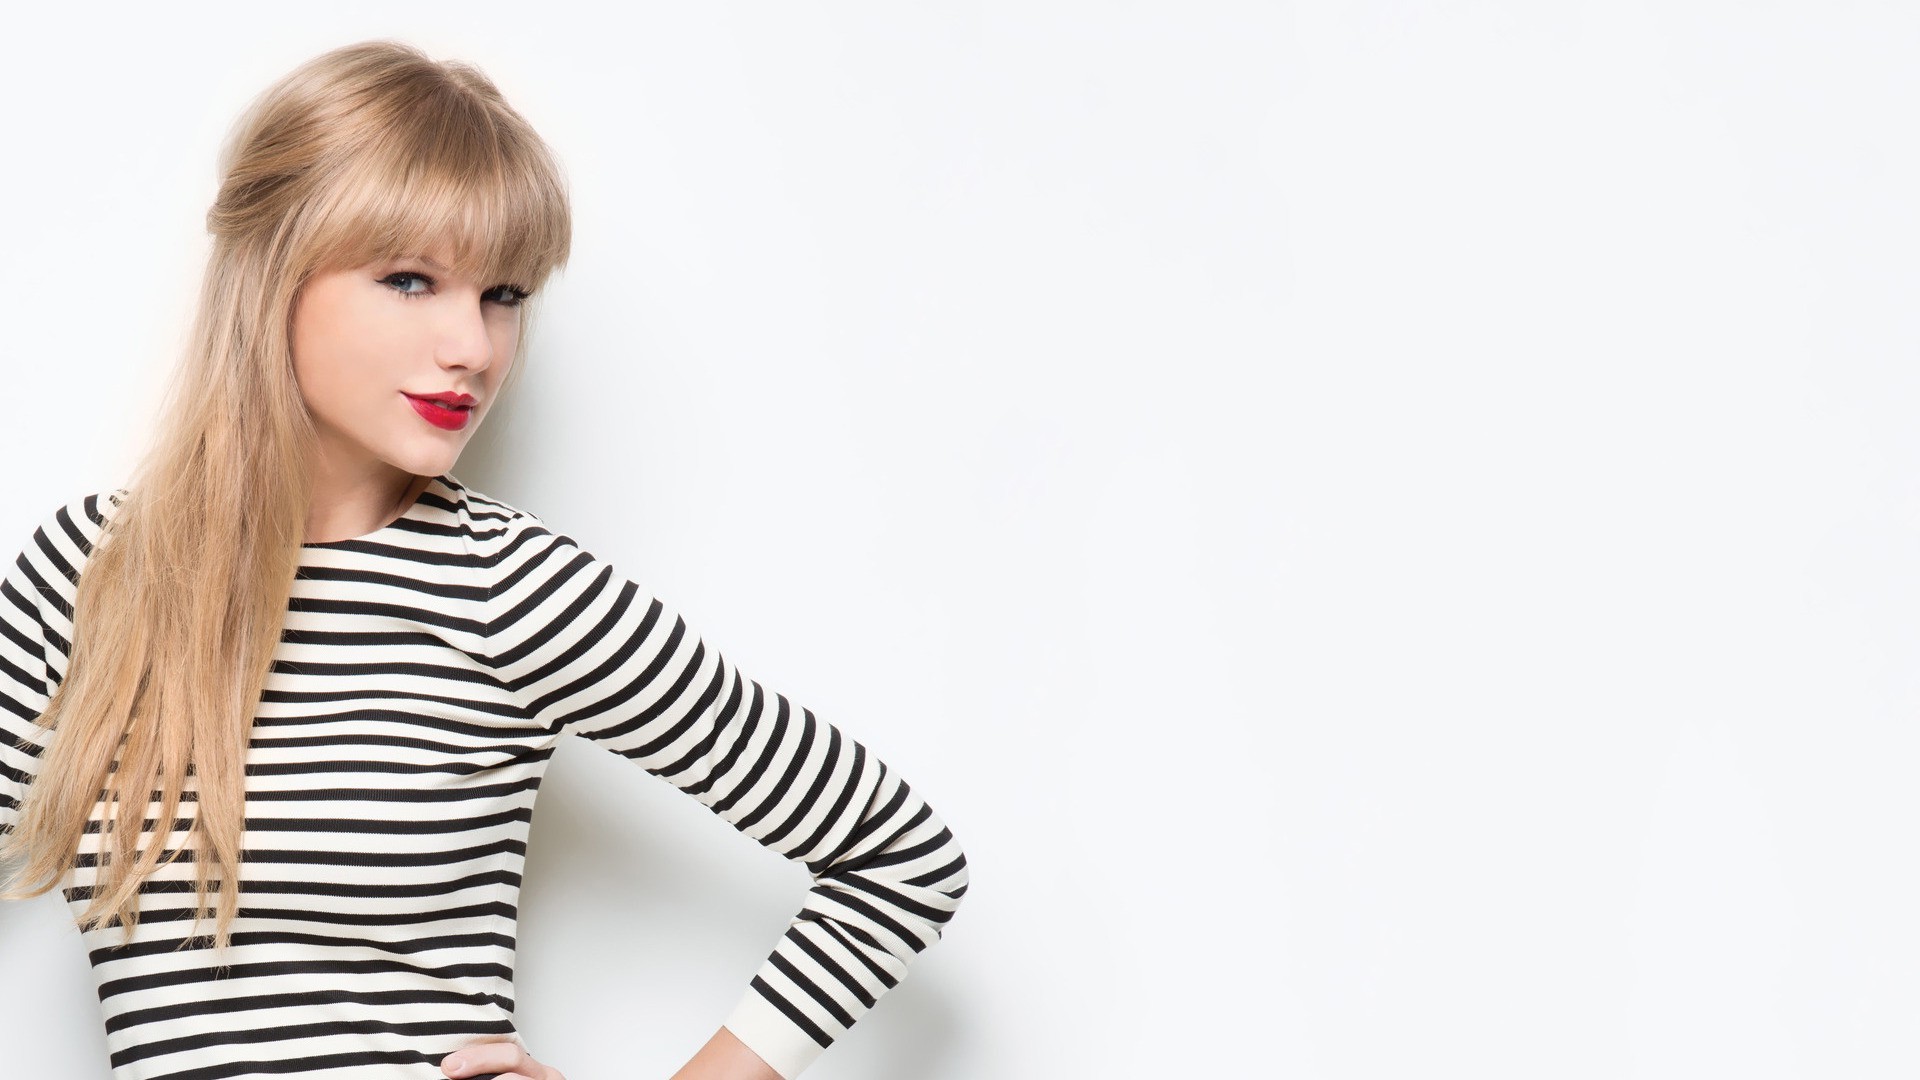 Taylor Swift, Celebrity, Blonde, Singer, Striped Clothing, Red Lipstick, White Background, Hands On Hips Wallpaper